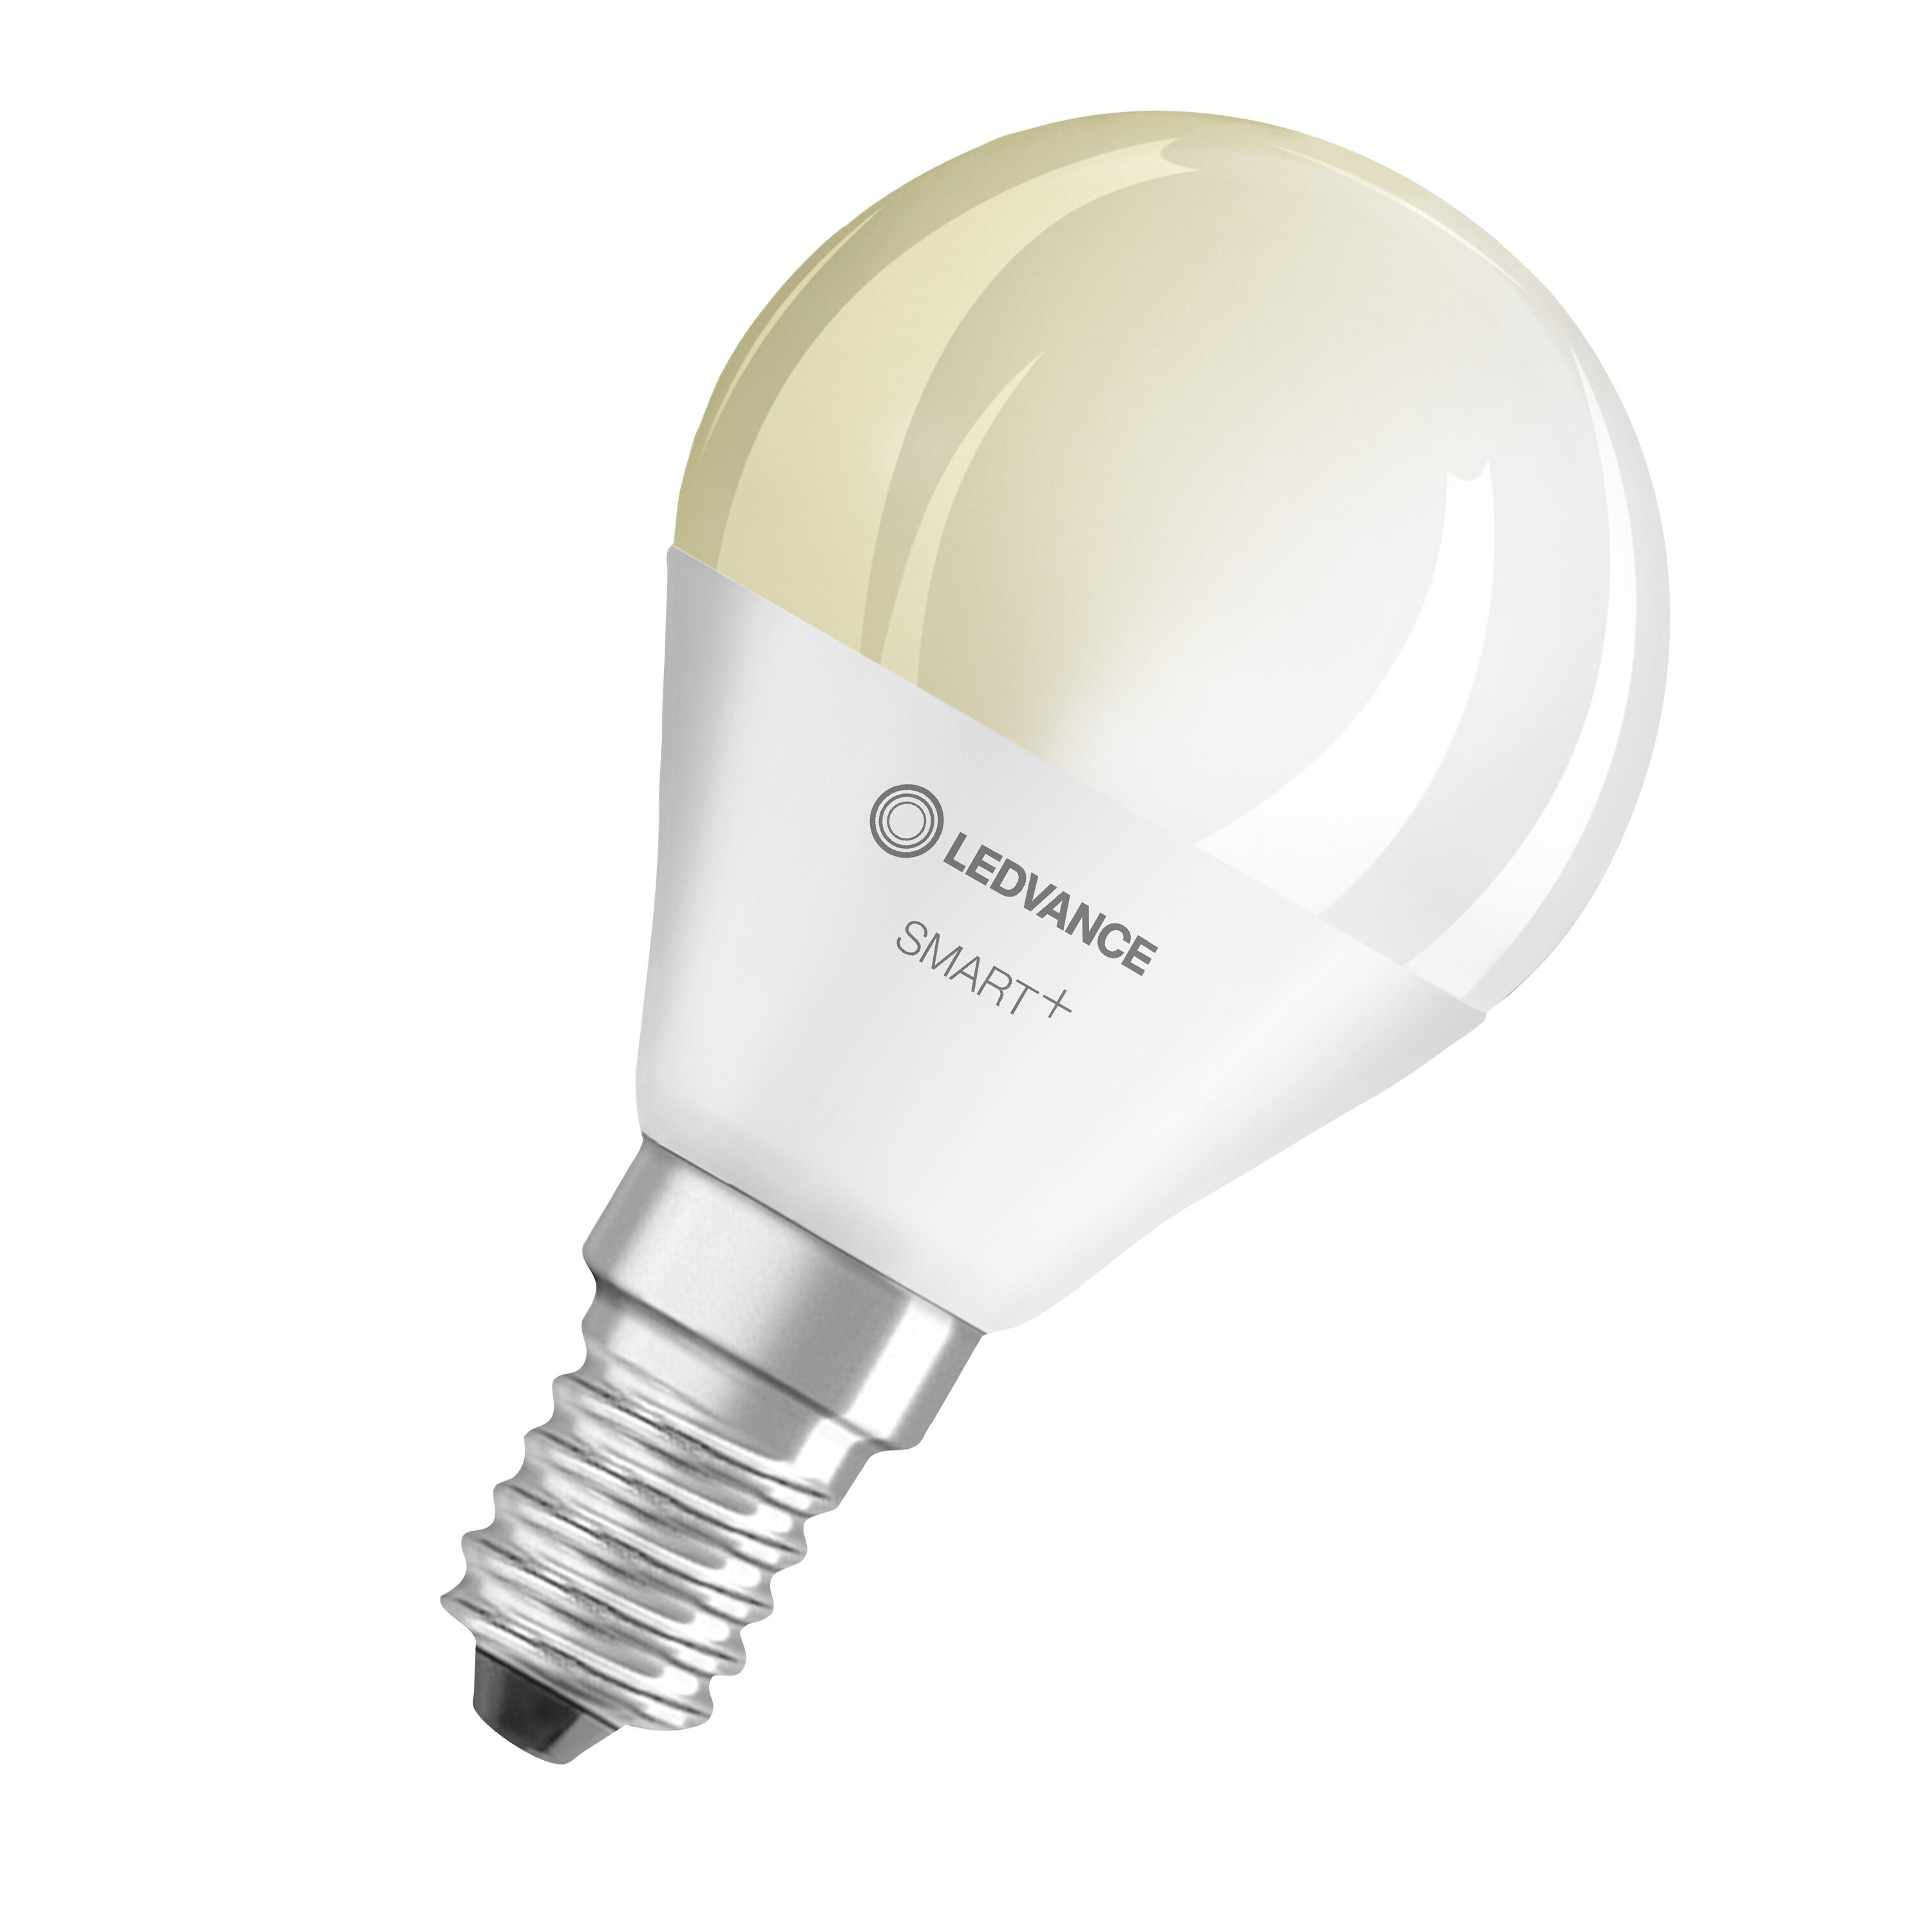 LEDVANCE SMART+ WiFi Mini Bulb Warmweiß LED Lampe Dimmable Smarte